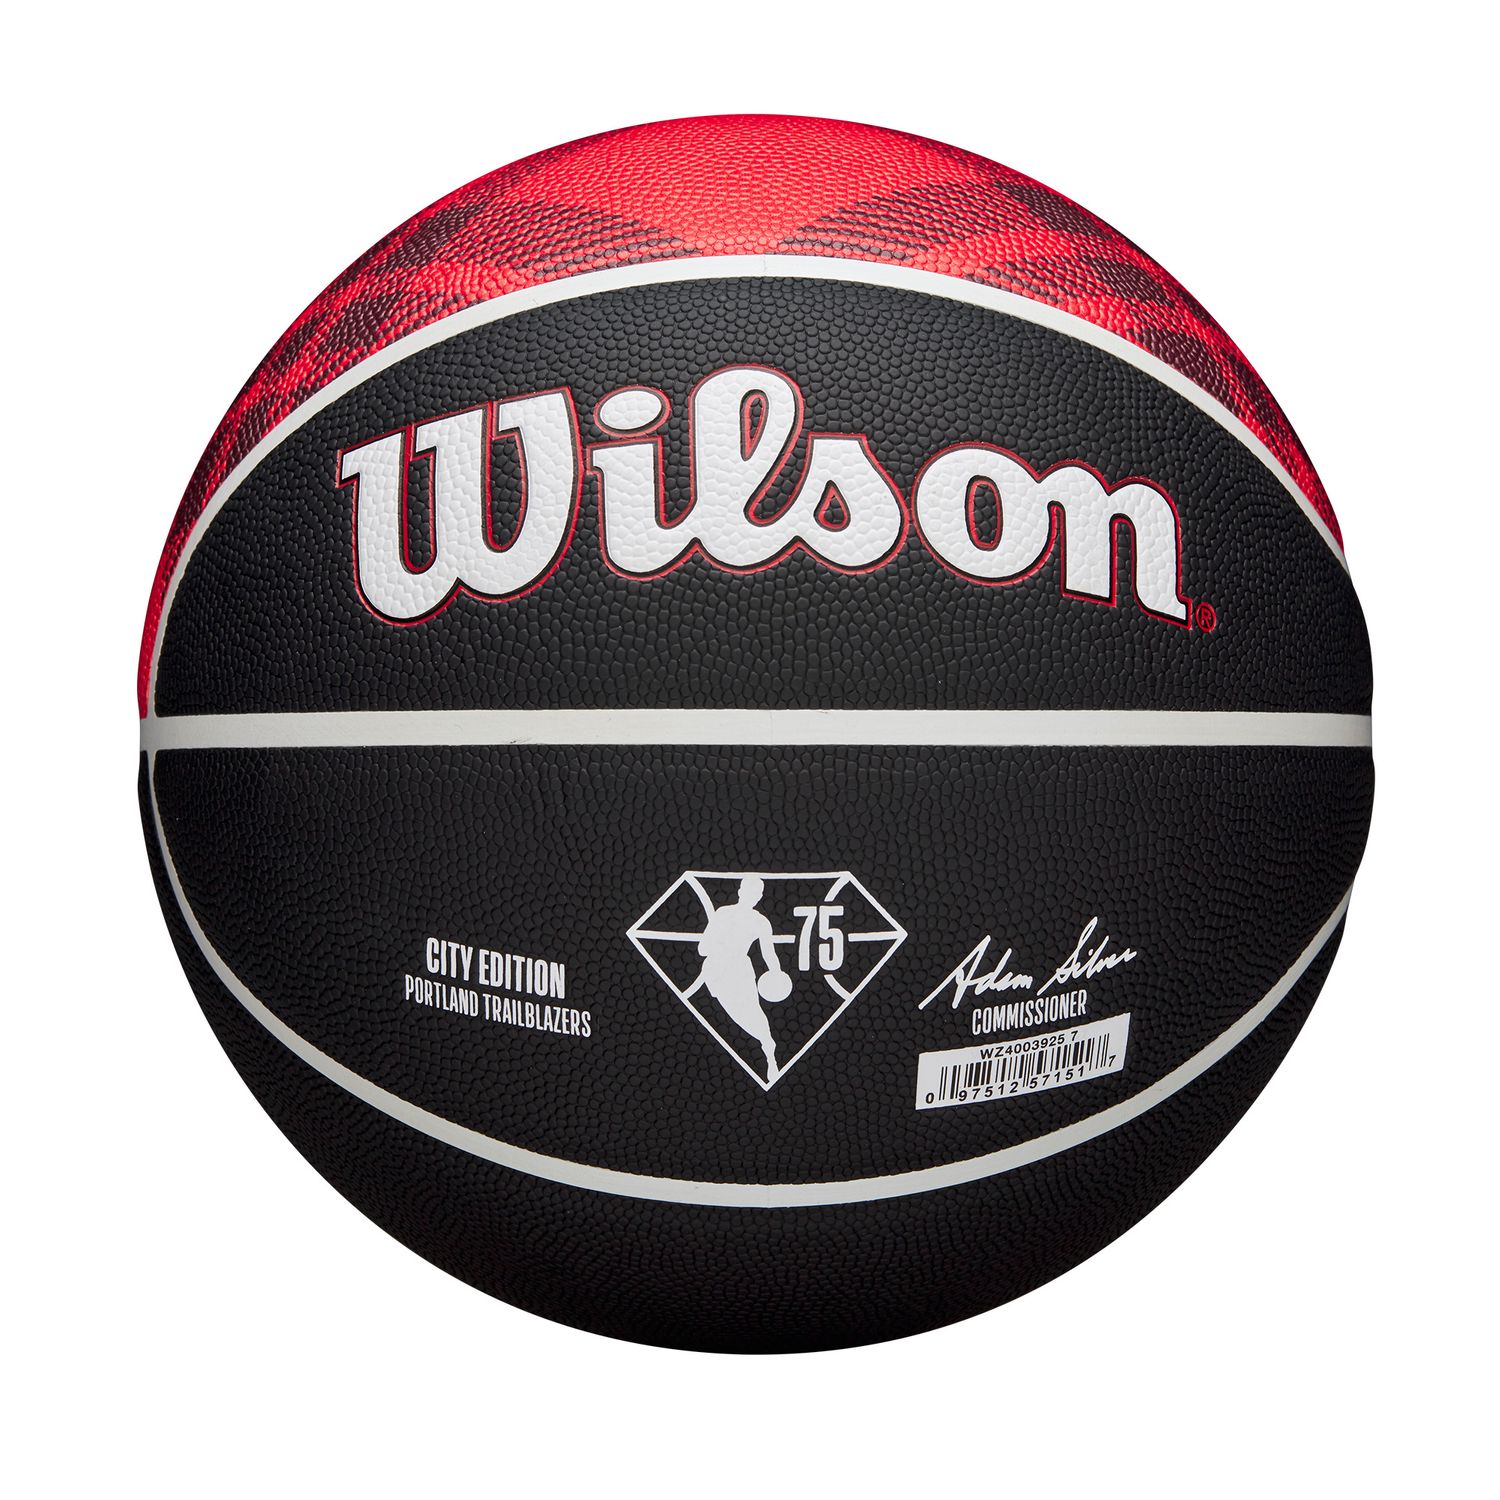 Wilson Portland Trail Blazers NBA 75th City Collector Basketball